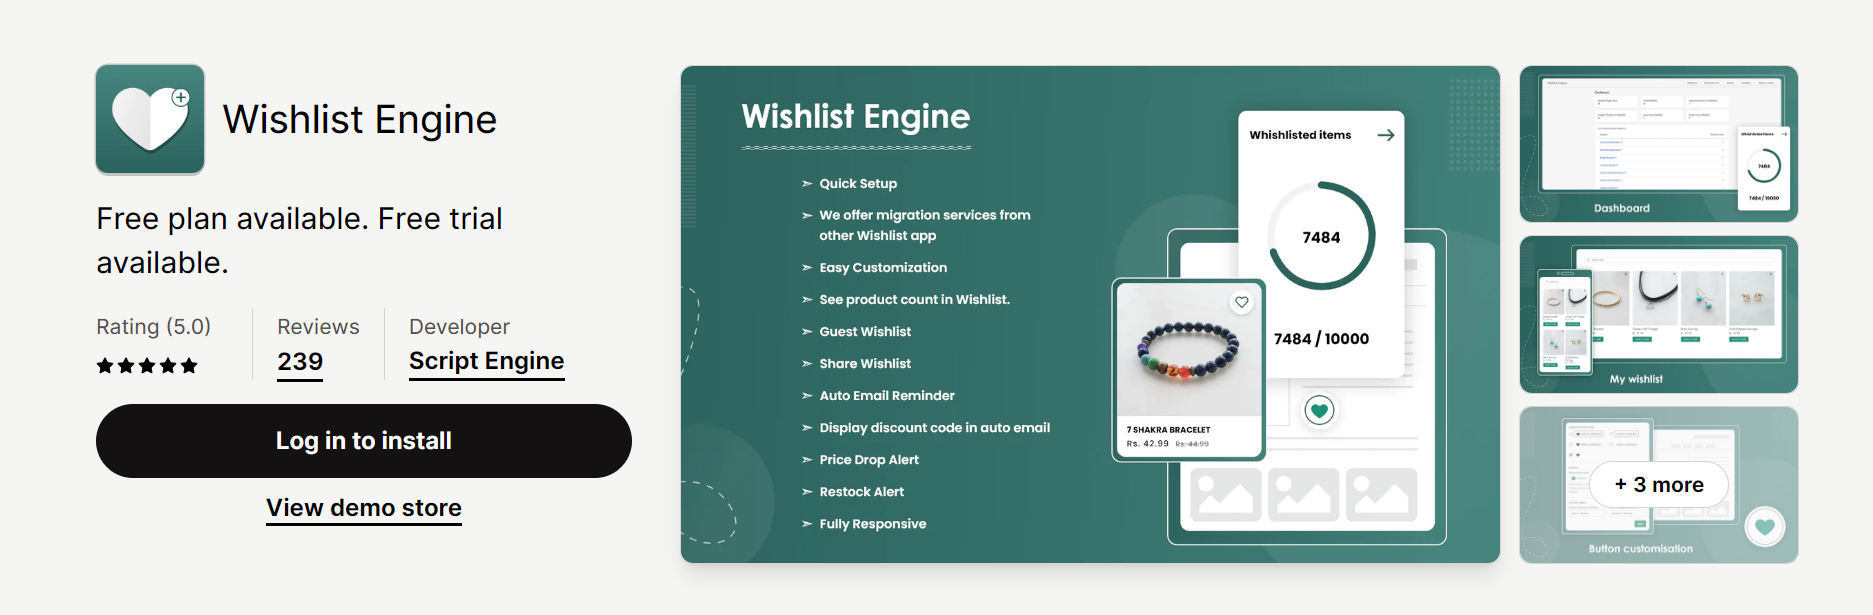 Wishlist Engine